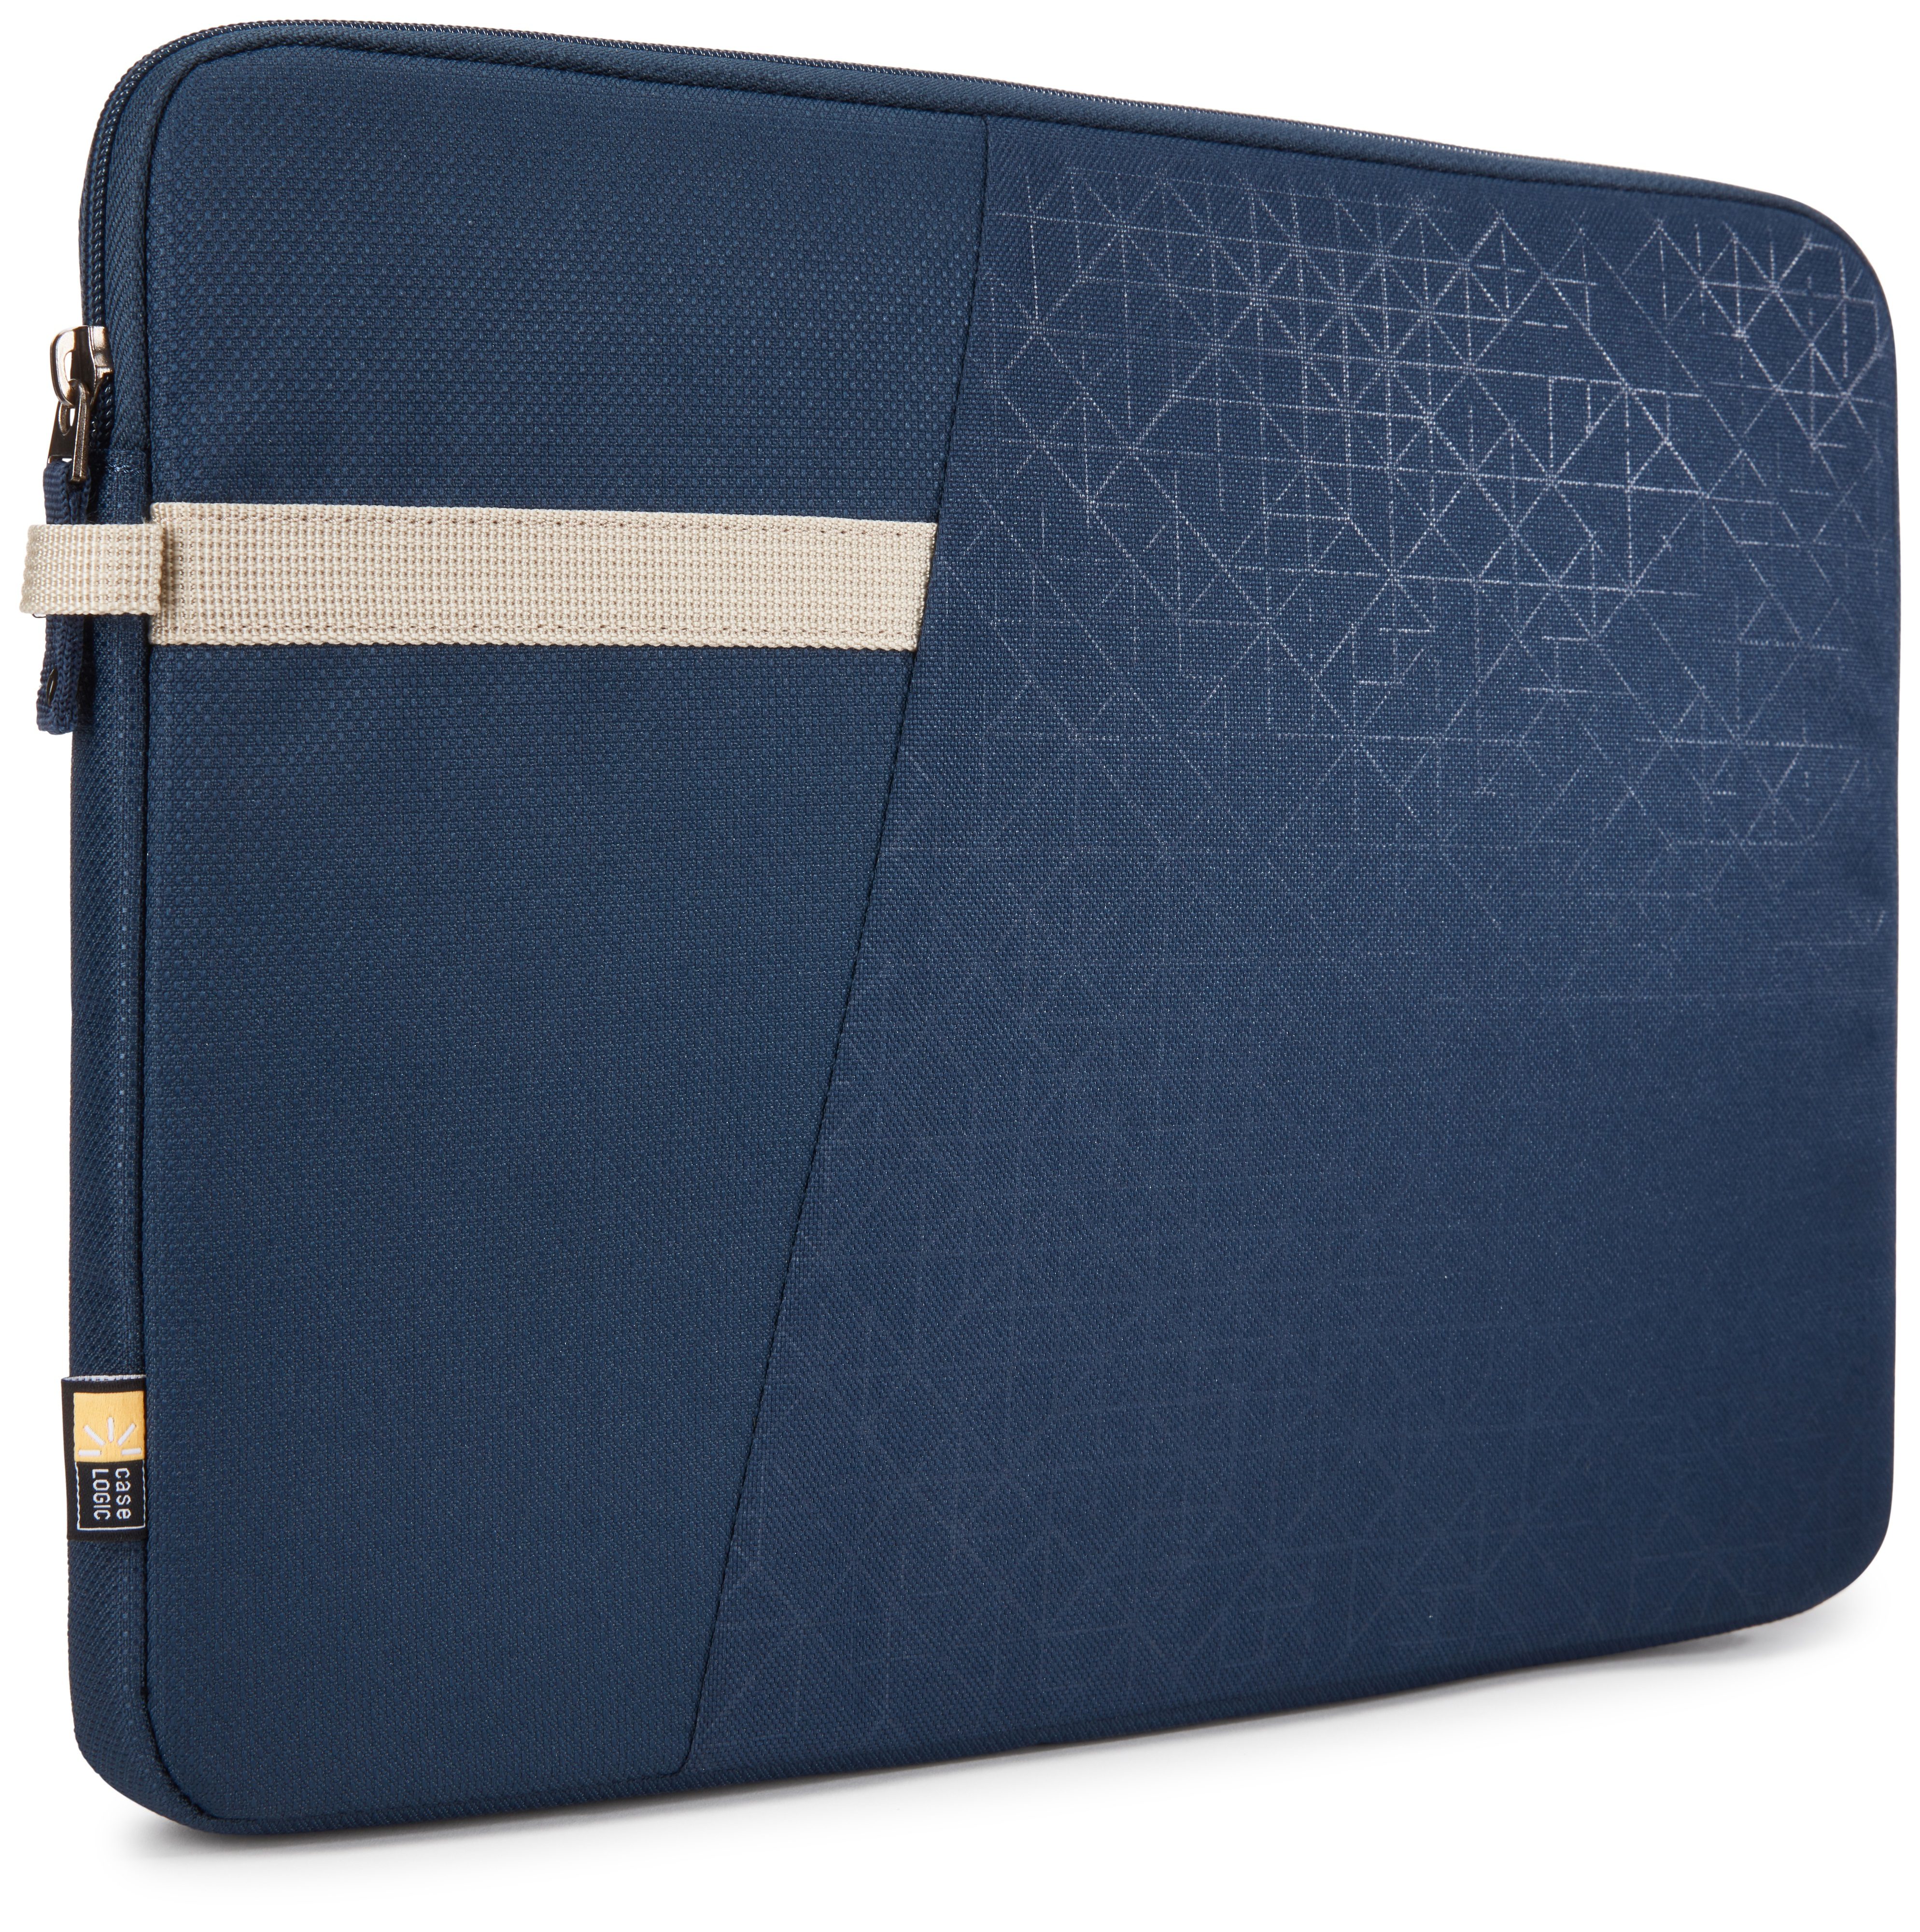 CASE LOGIC Sleeve Ibira für Universal Blau Polyester, Notebooksleeve Dress